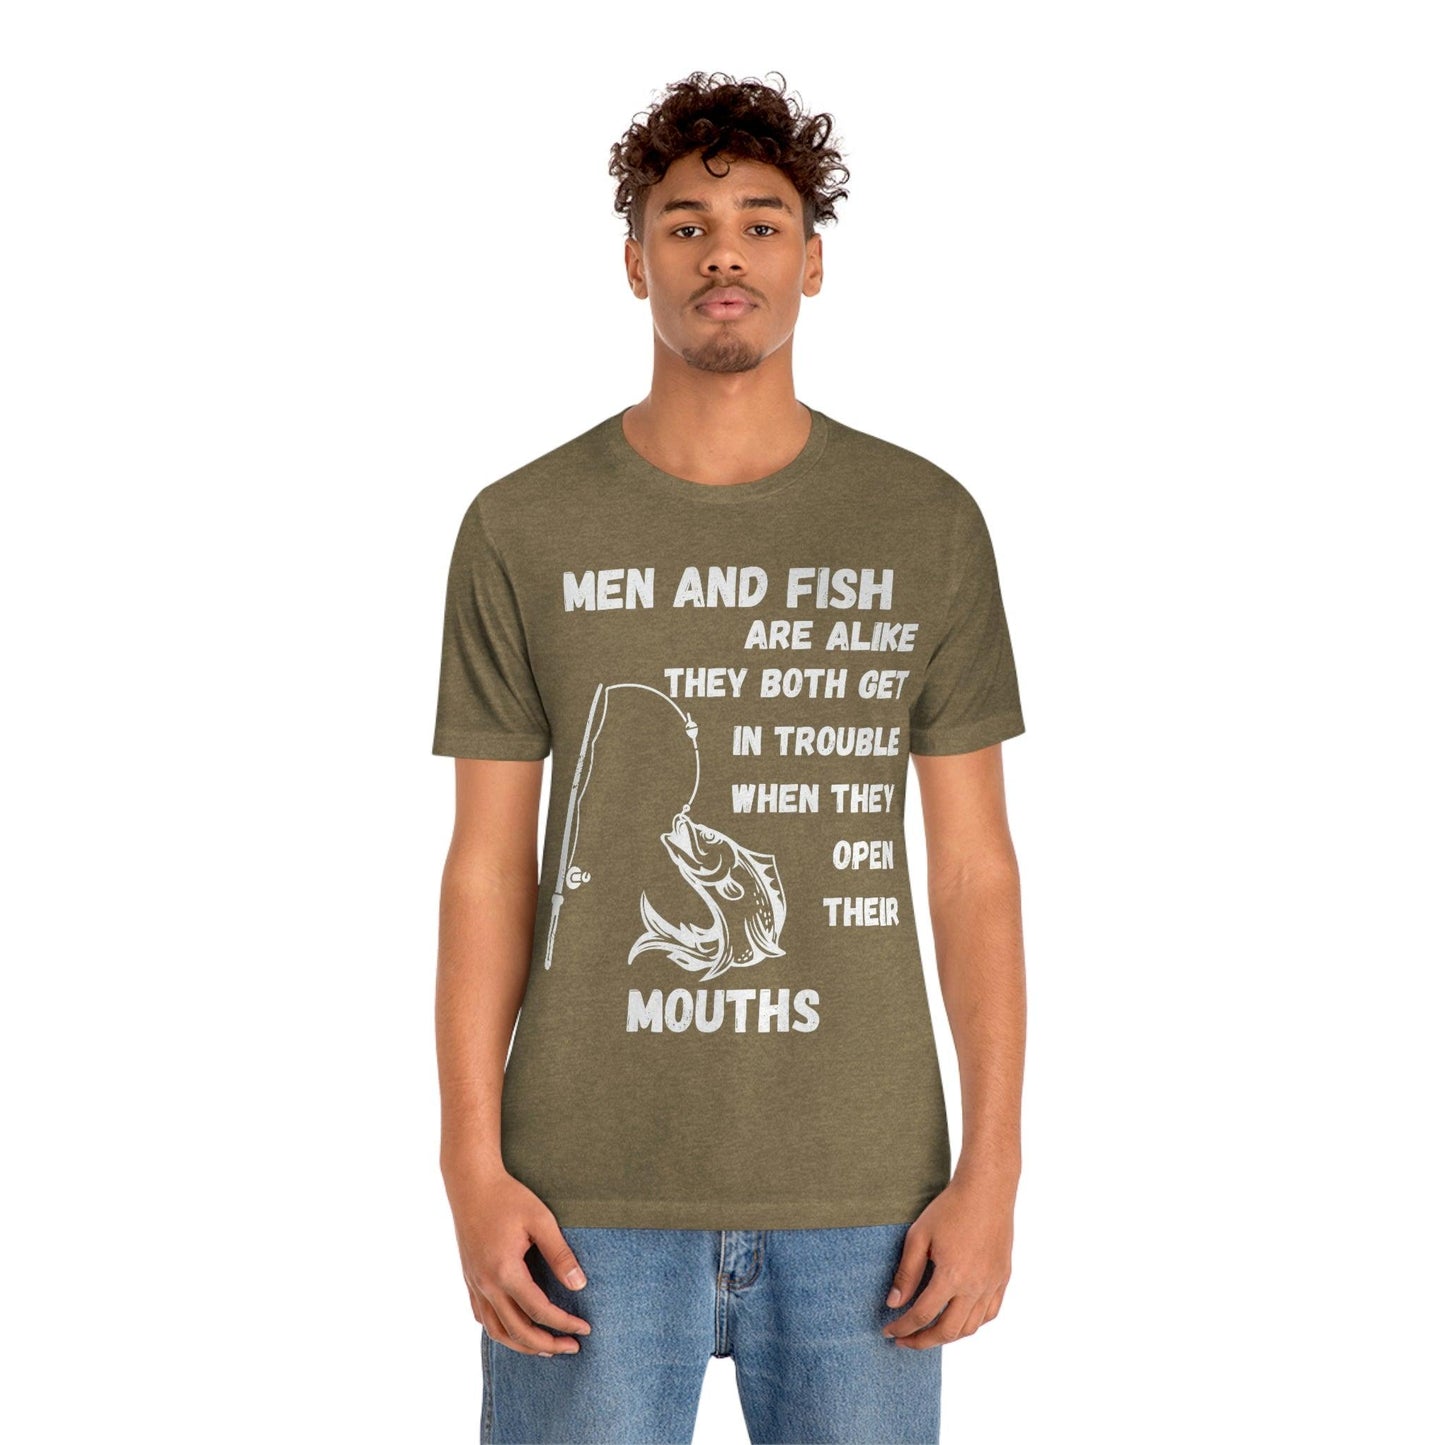 Men and Fish are Alike - Funny fishing shirt